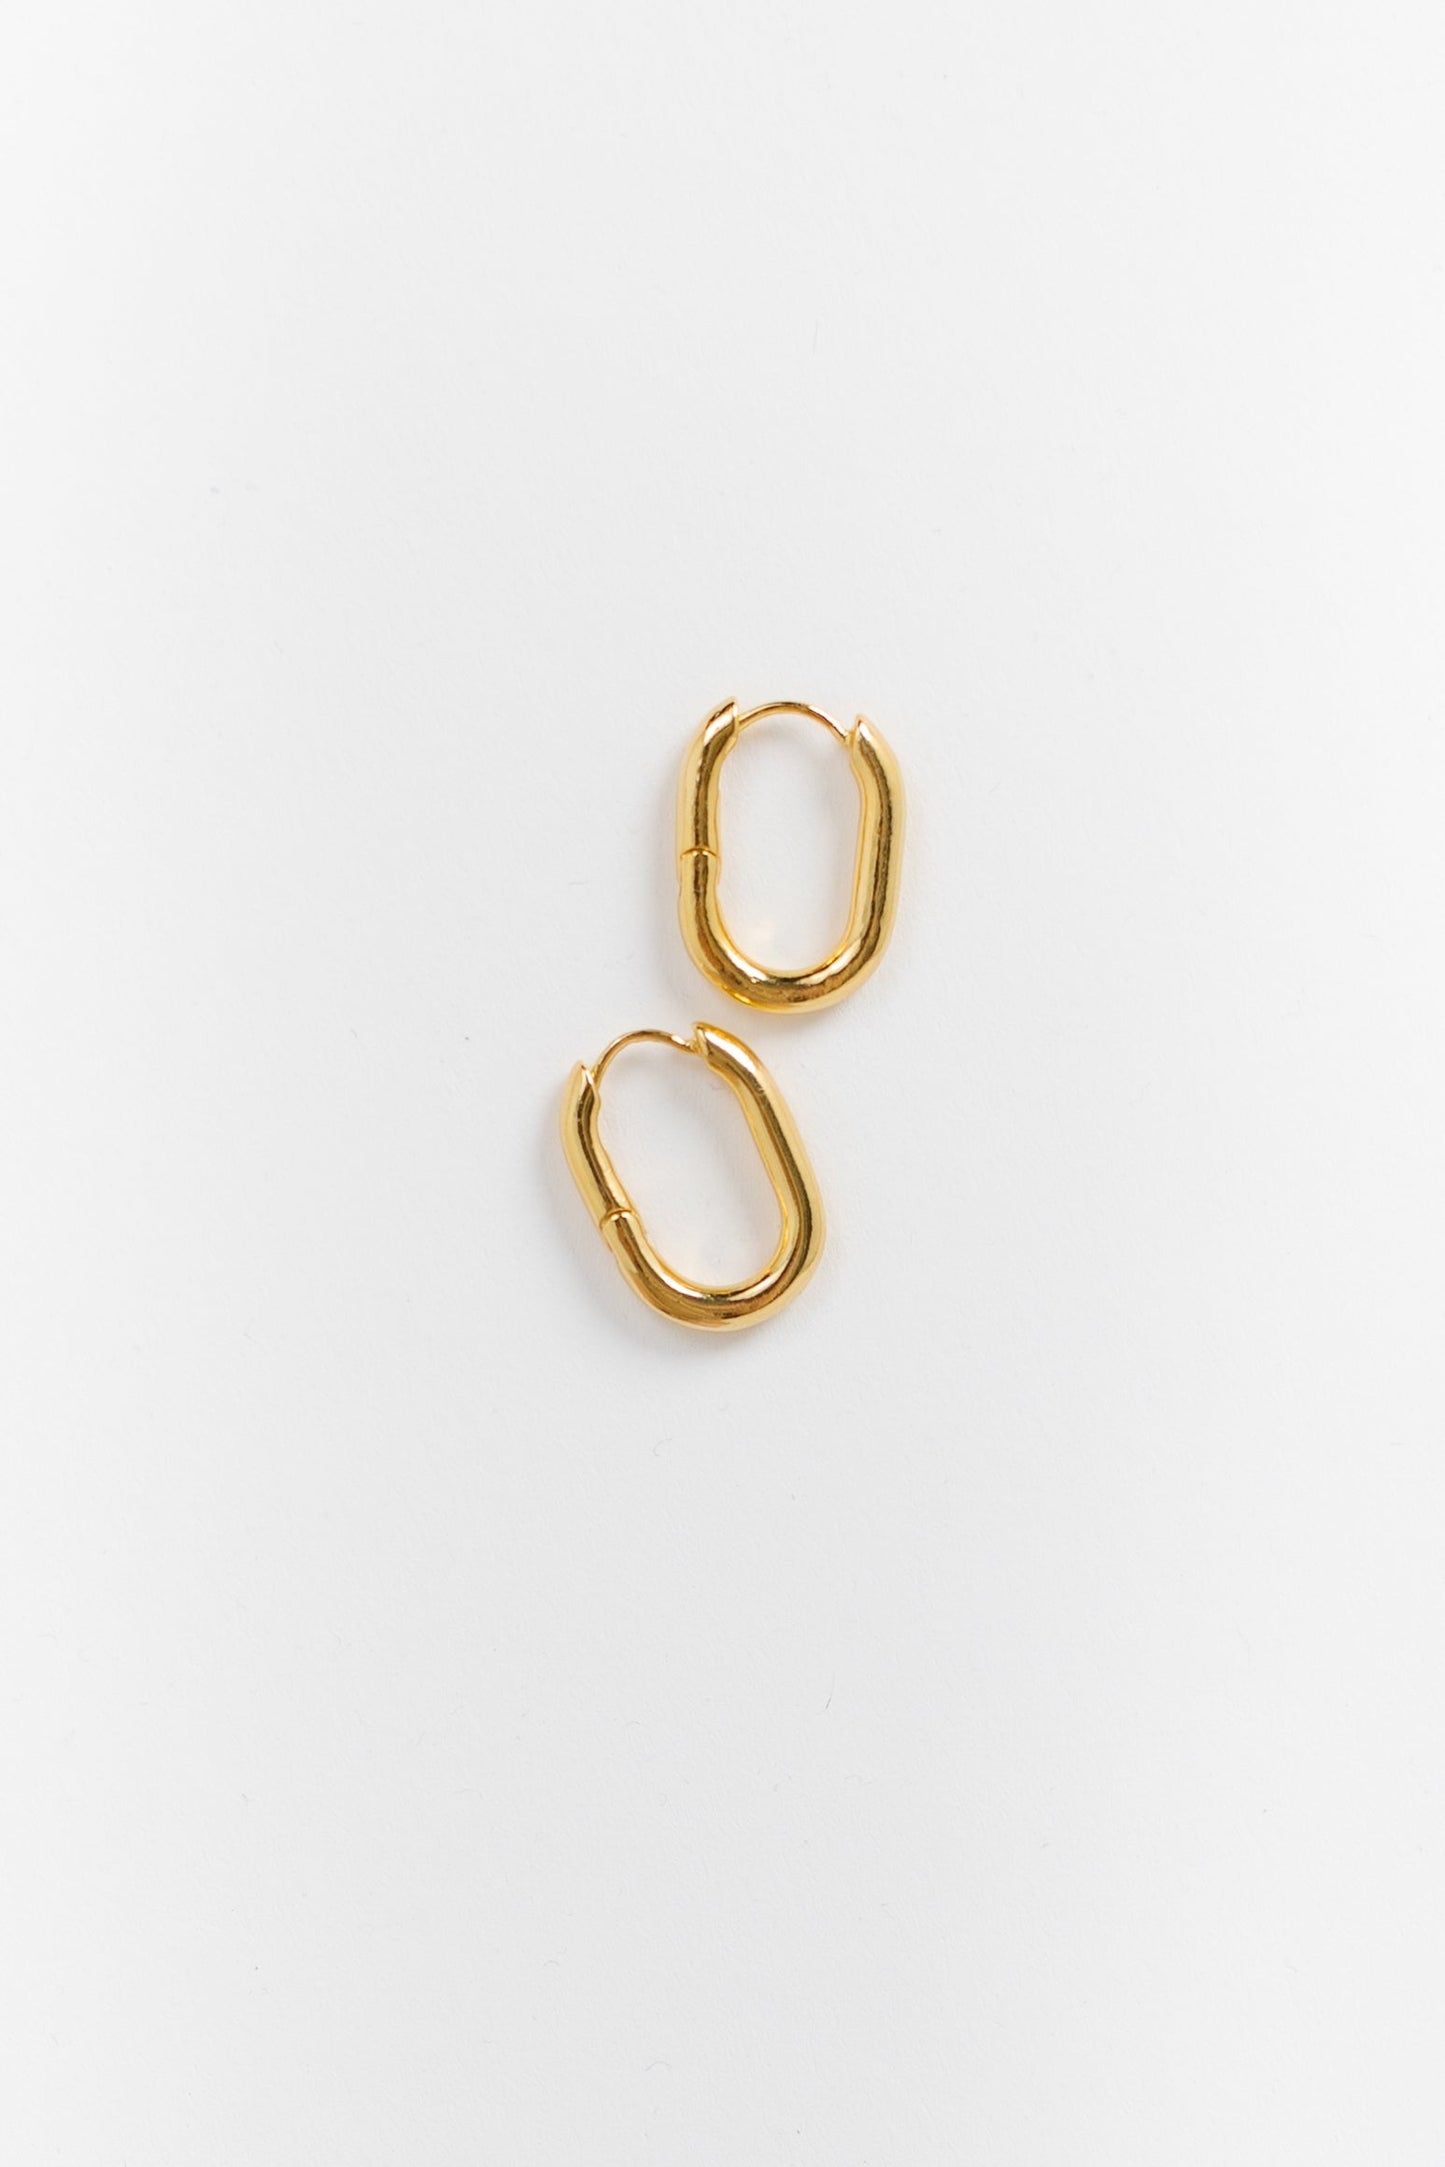 Cove Earrings Jaden Oval Gold WOMEN'S EARINGS Cove Accessories 